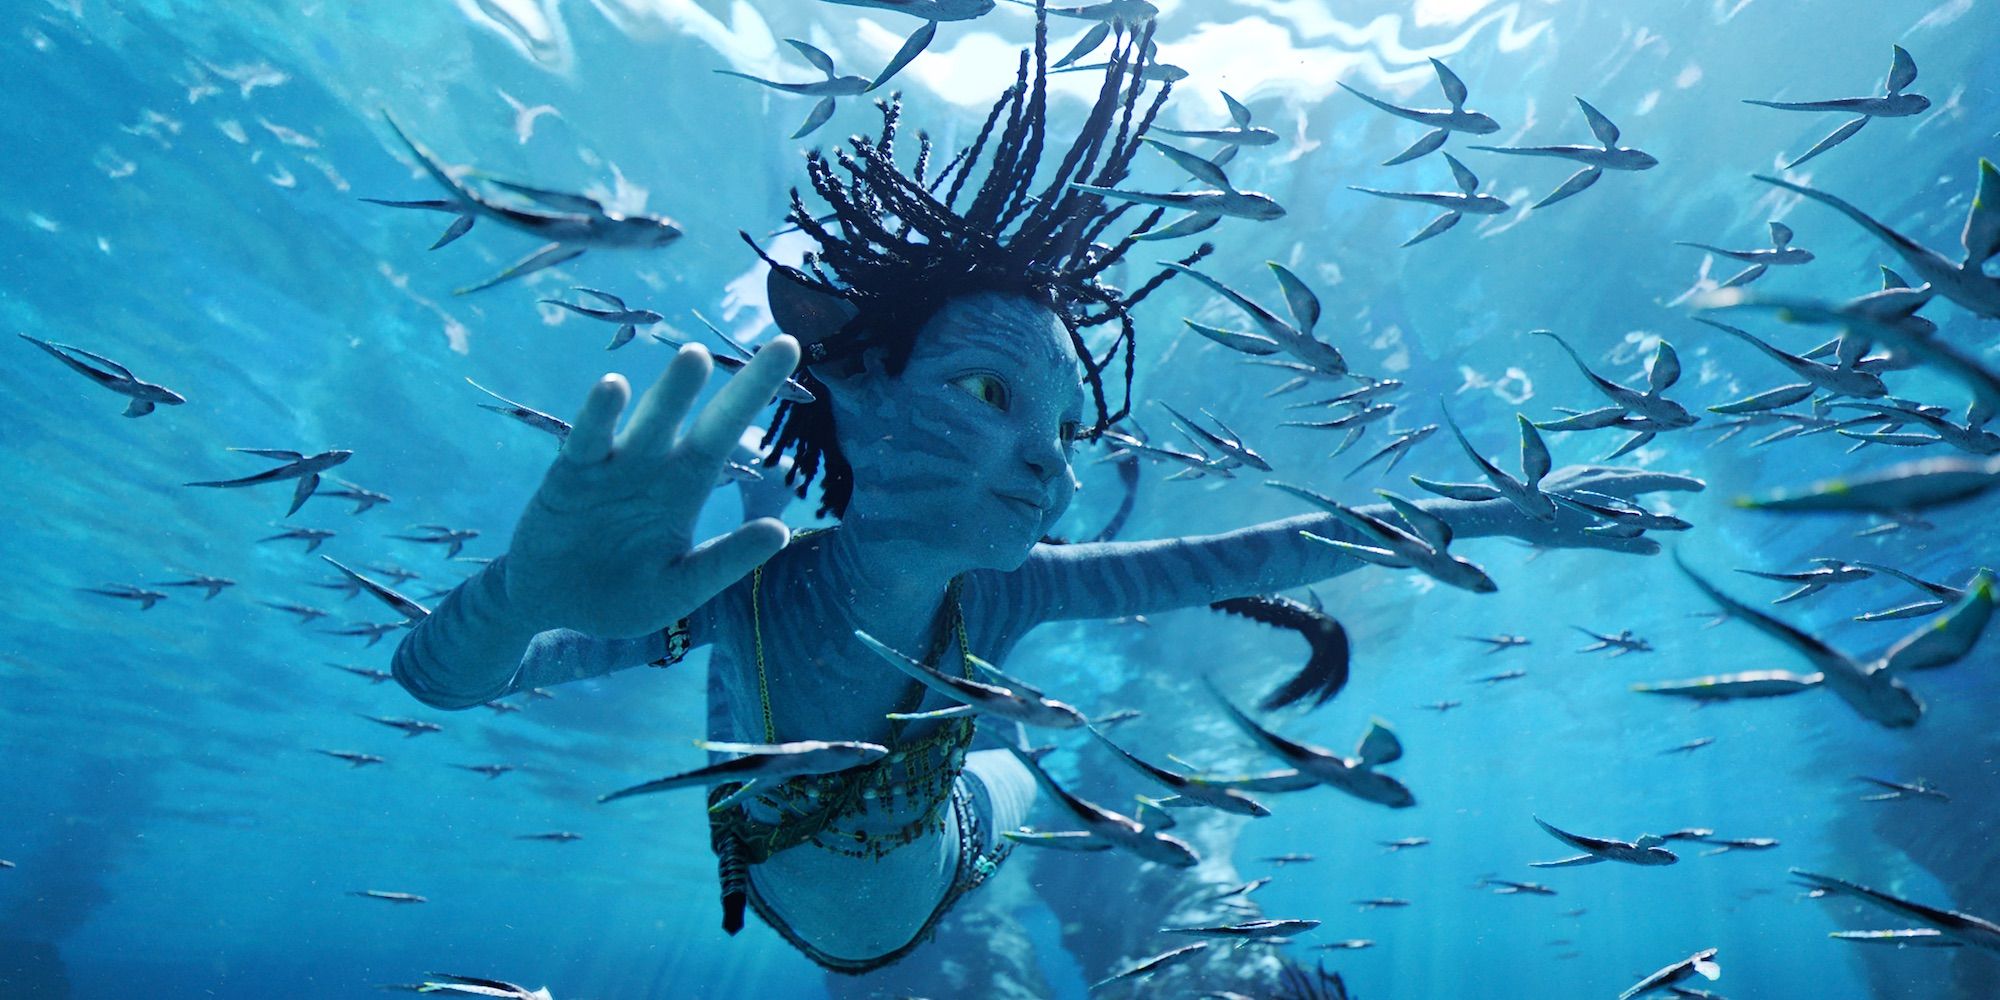 Duke swimming underwater with fish in Avatar the Way of Water